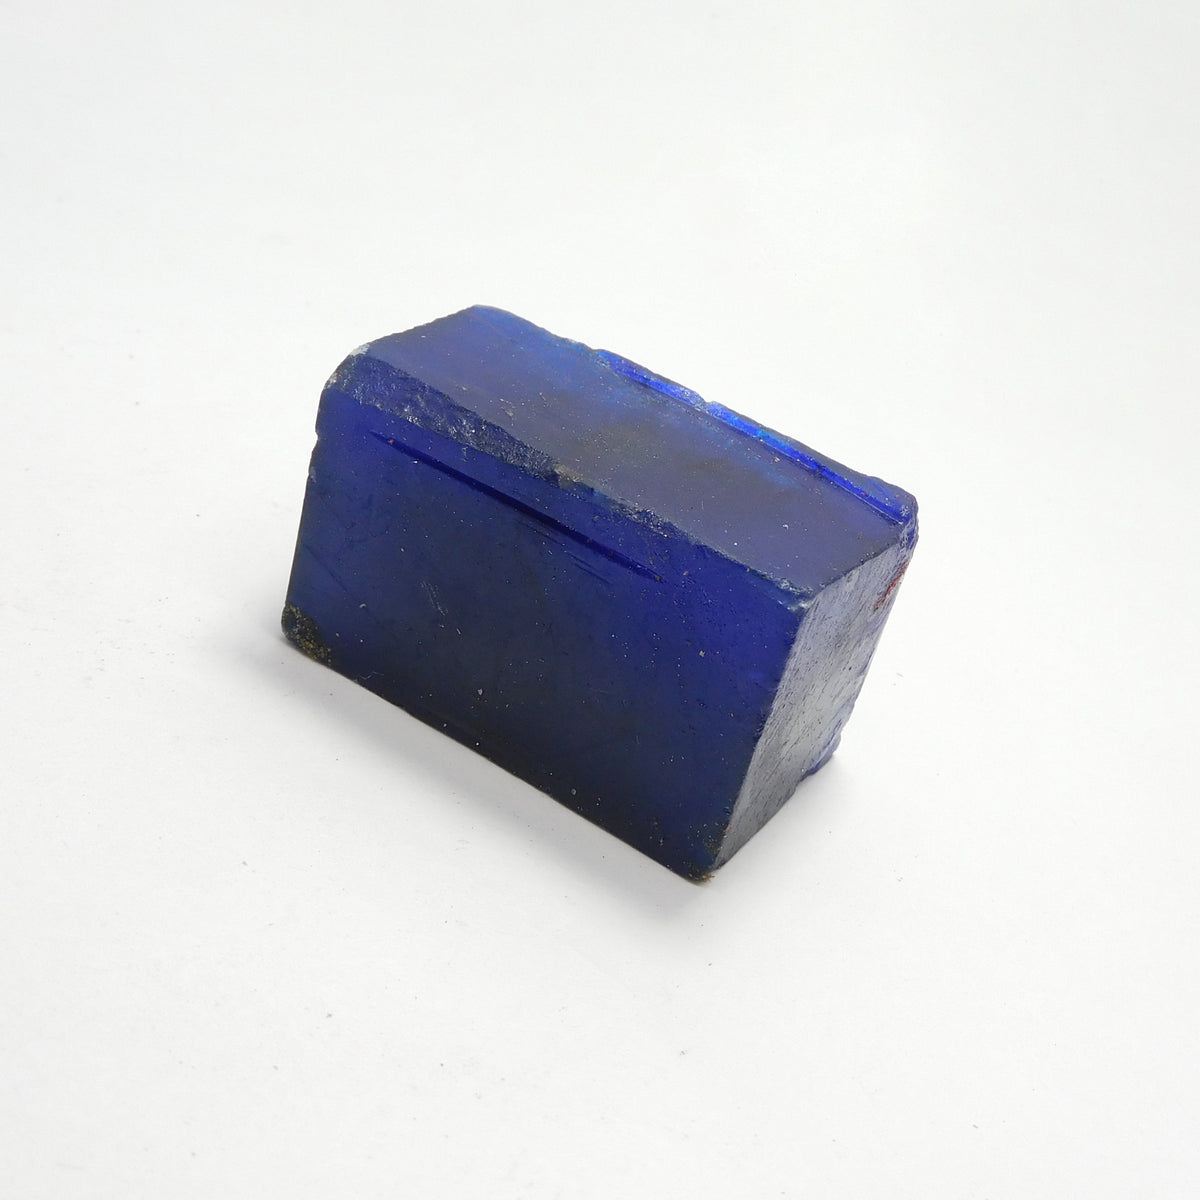 418.15 Carat Fancy Cut Rough Natural Tanzanite Blue CERTIFIED Uncut Raw Rough Loose Gemstone